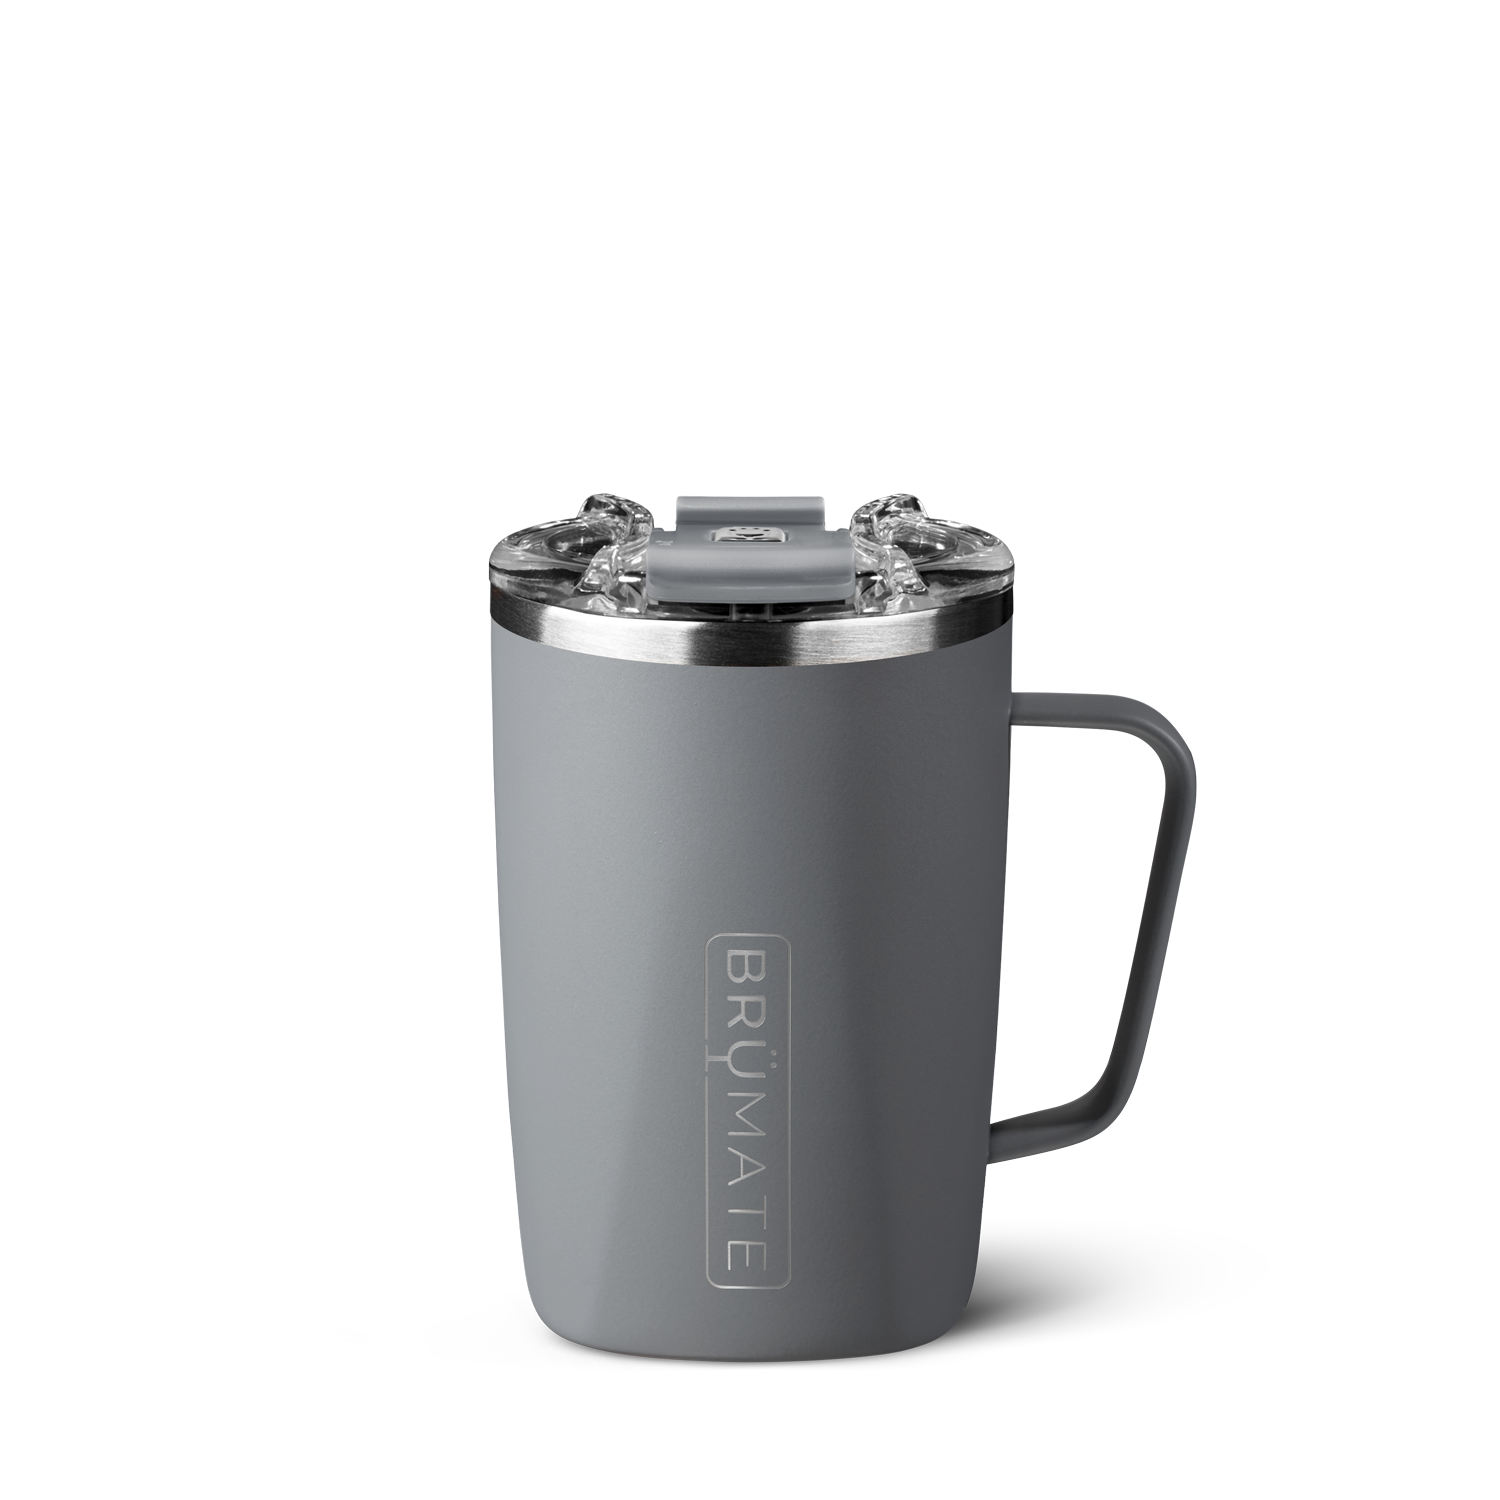  BrüMate Toddy - Stainless Steel Coffee Travel Mug